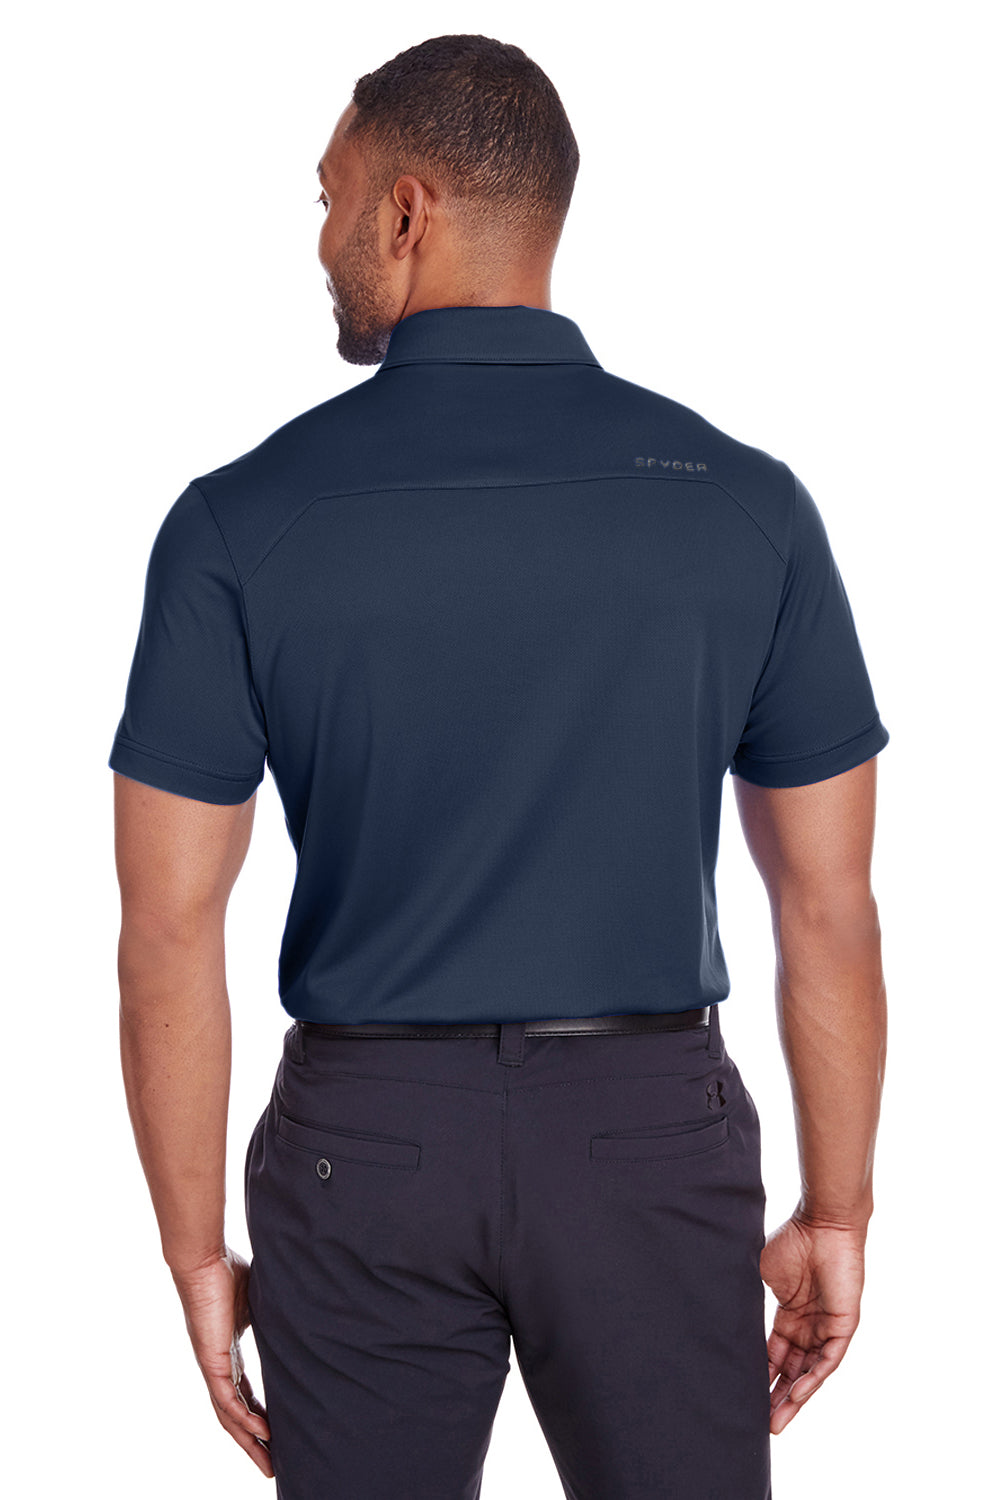 Spyder S16532 Womens Freestyle Short Sleeve Polo Shirt Navy Blue Back